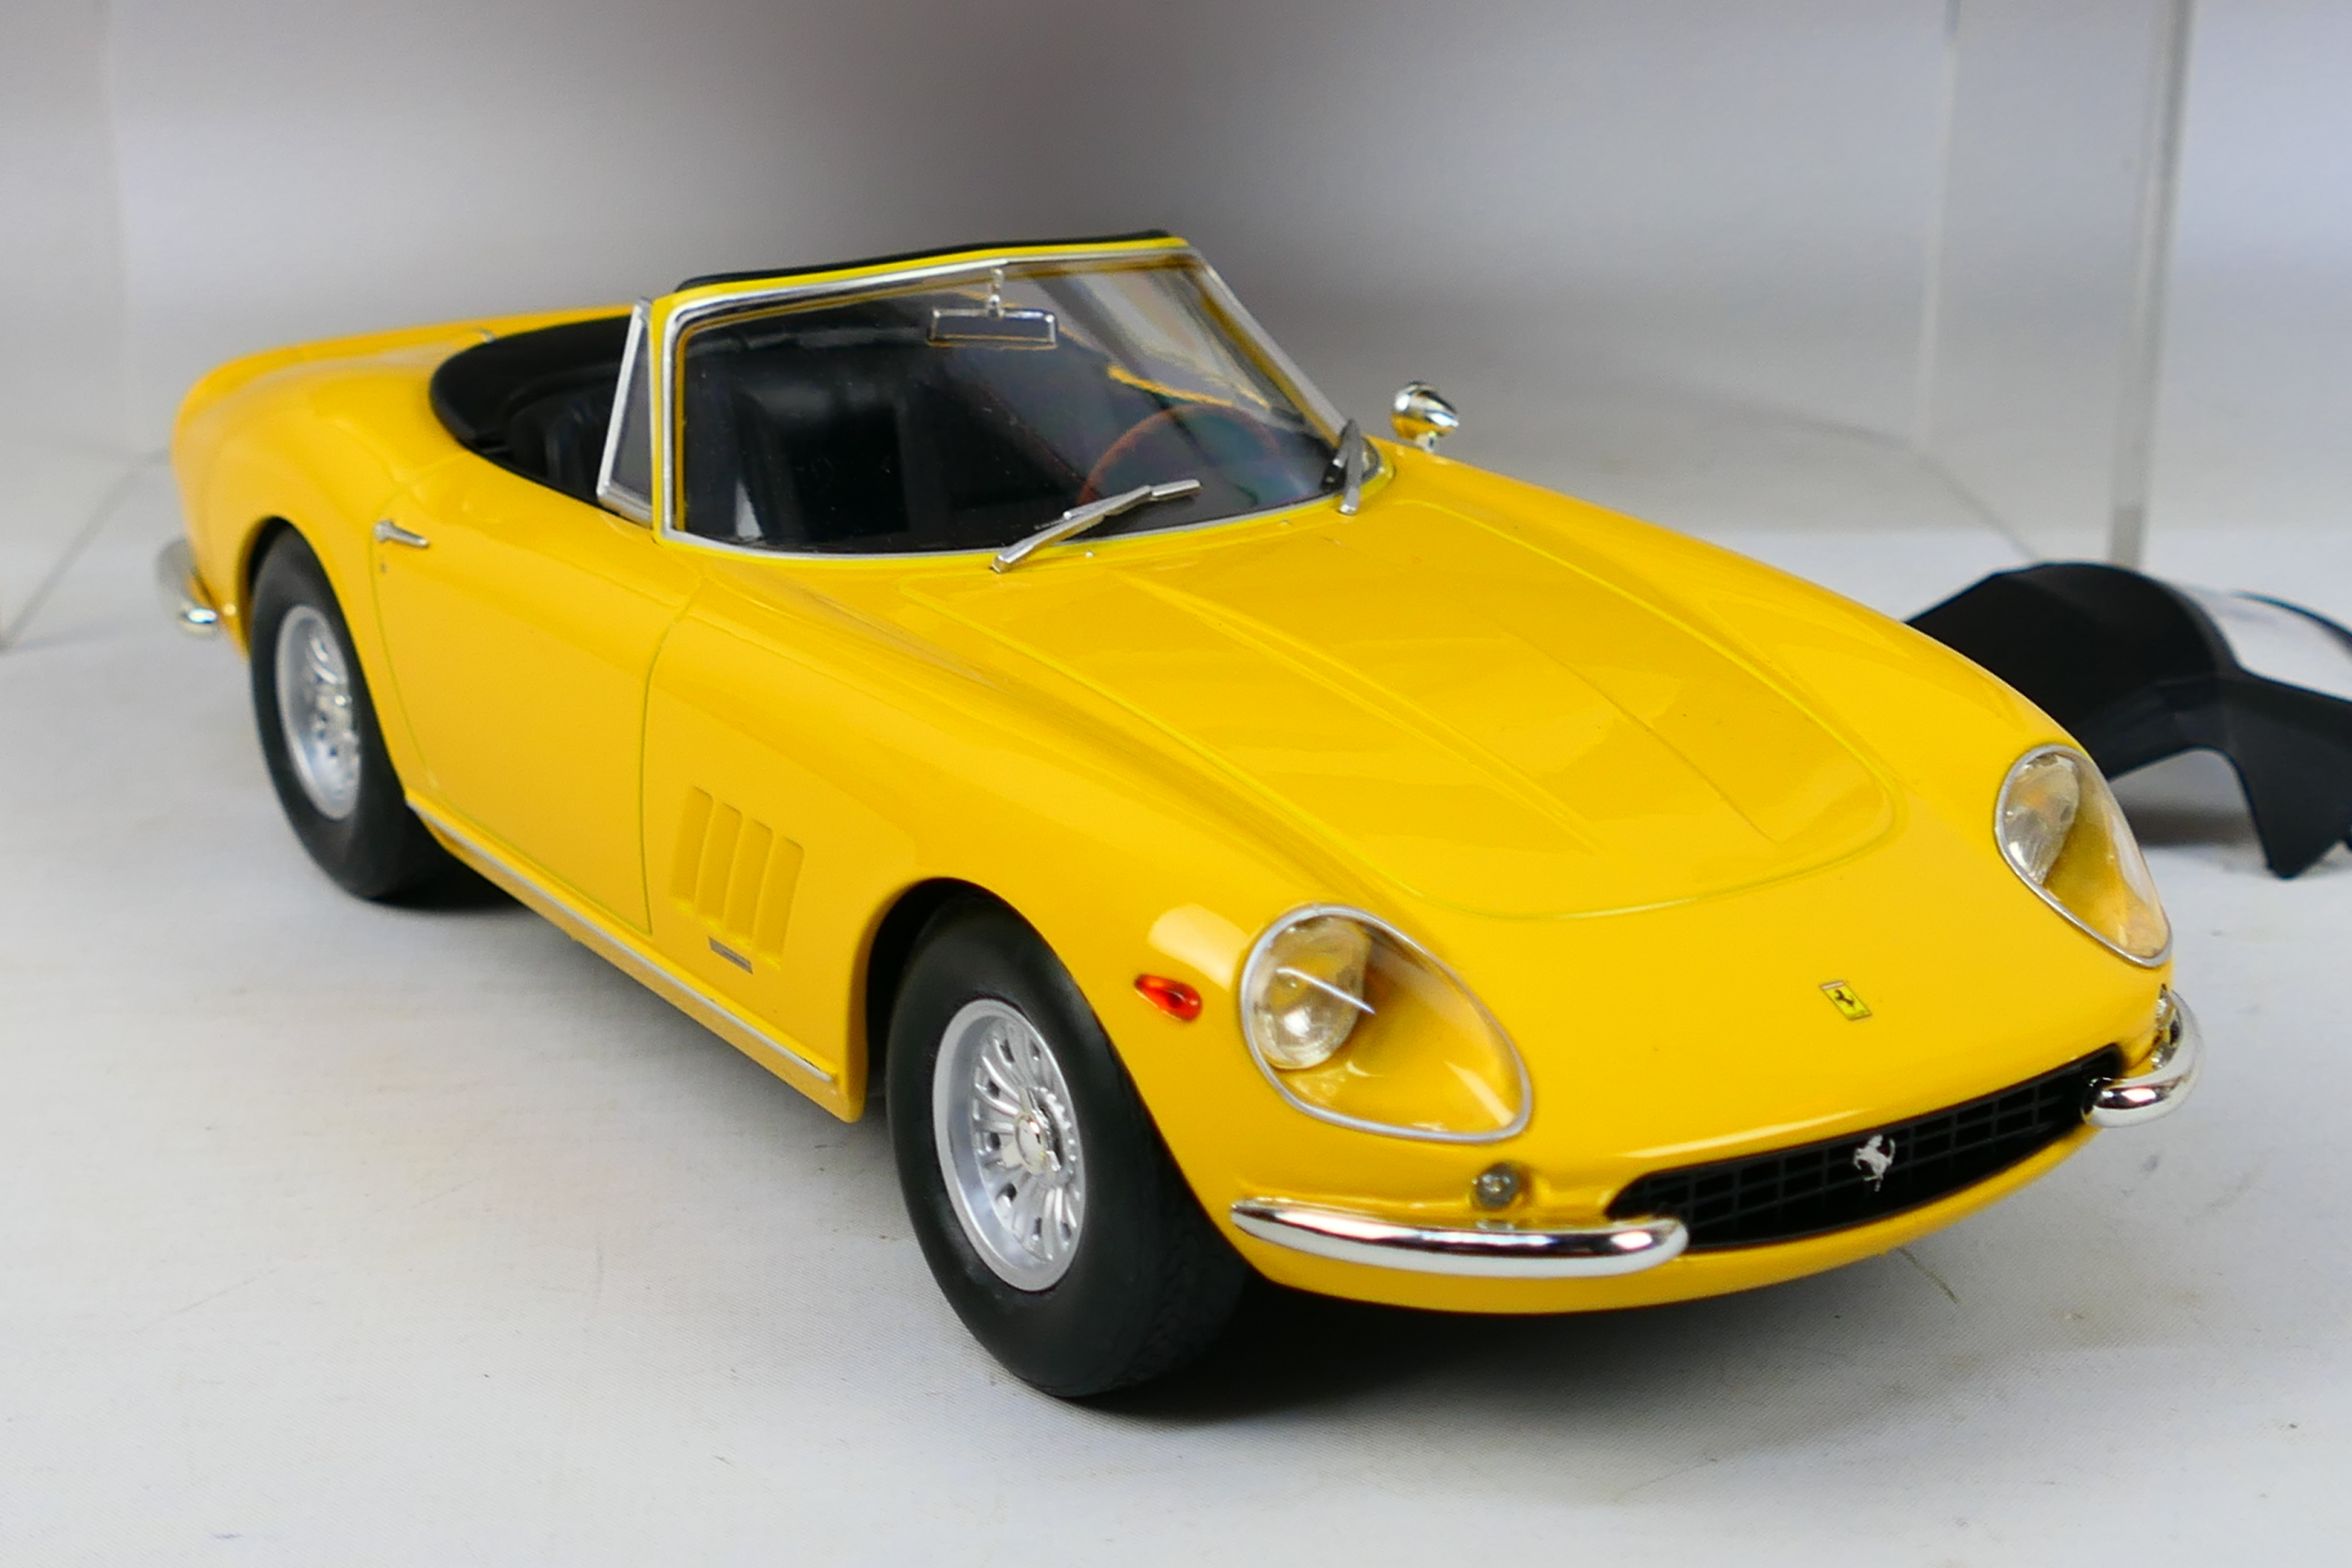 KK Scale - A boxed KK Scale Limited Edition #KKDC180232 1:18 scale Ferrari 275 /4 NART Spyder 1967. - Image 7 of 8